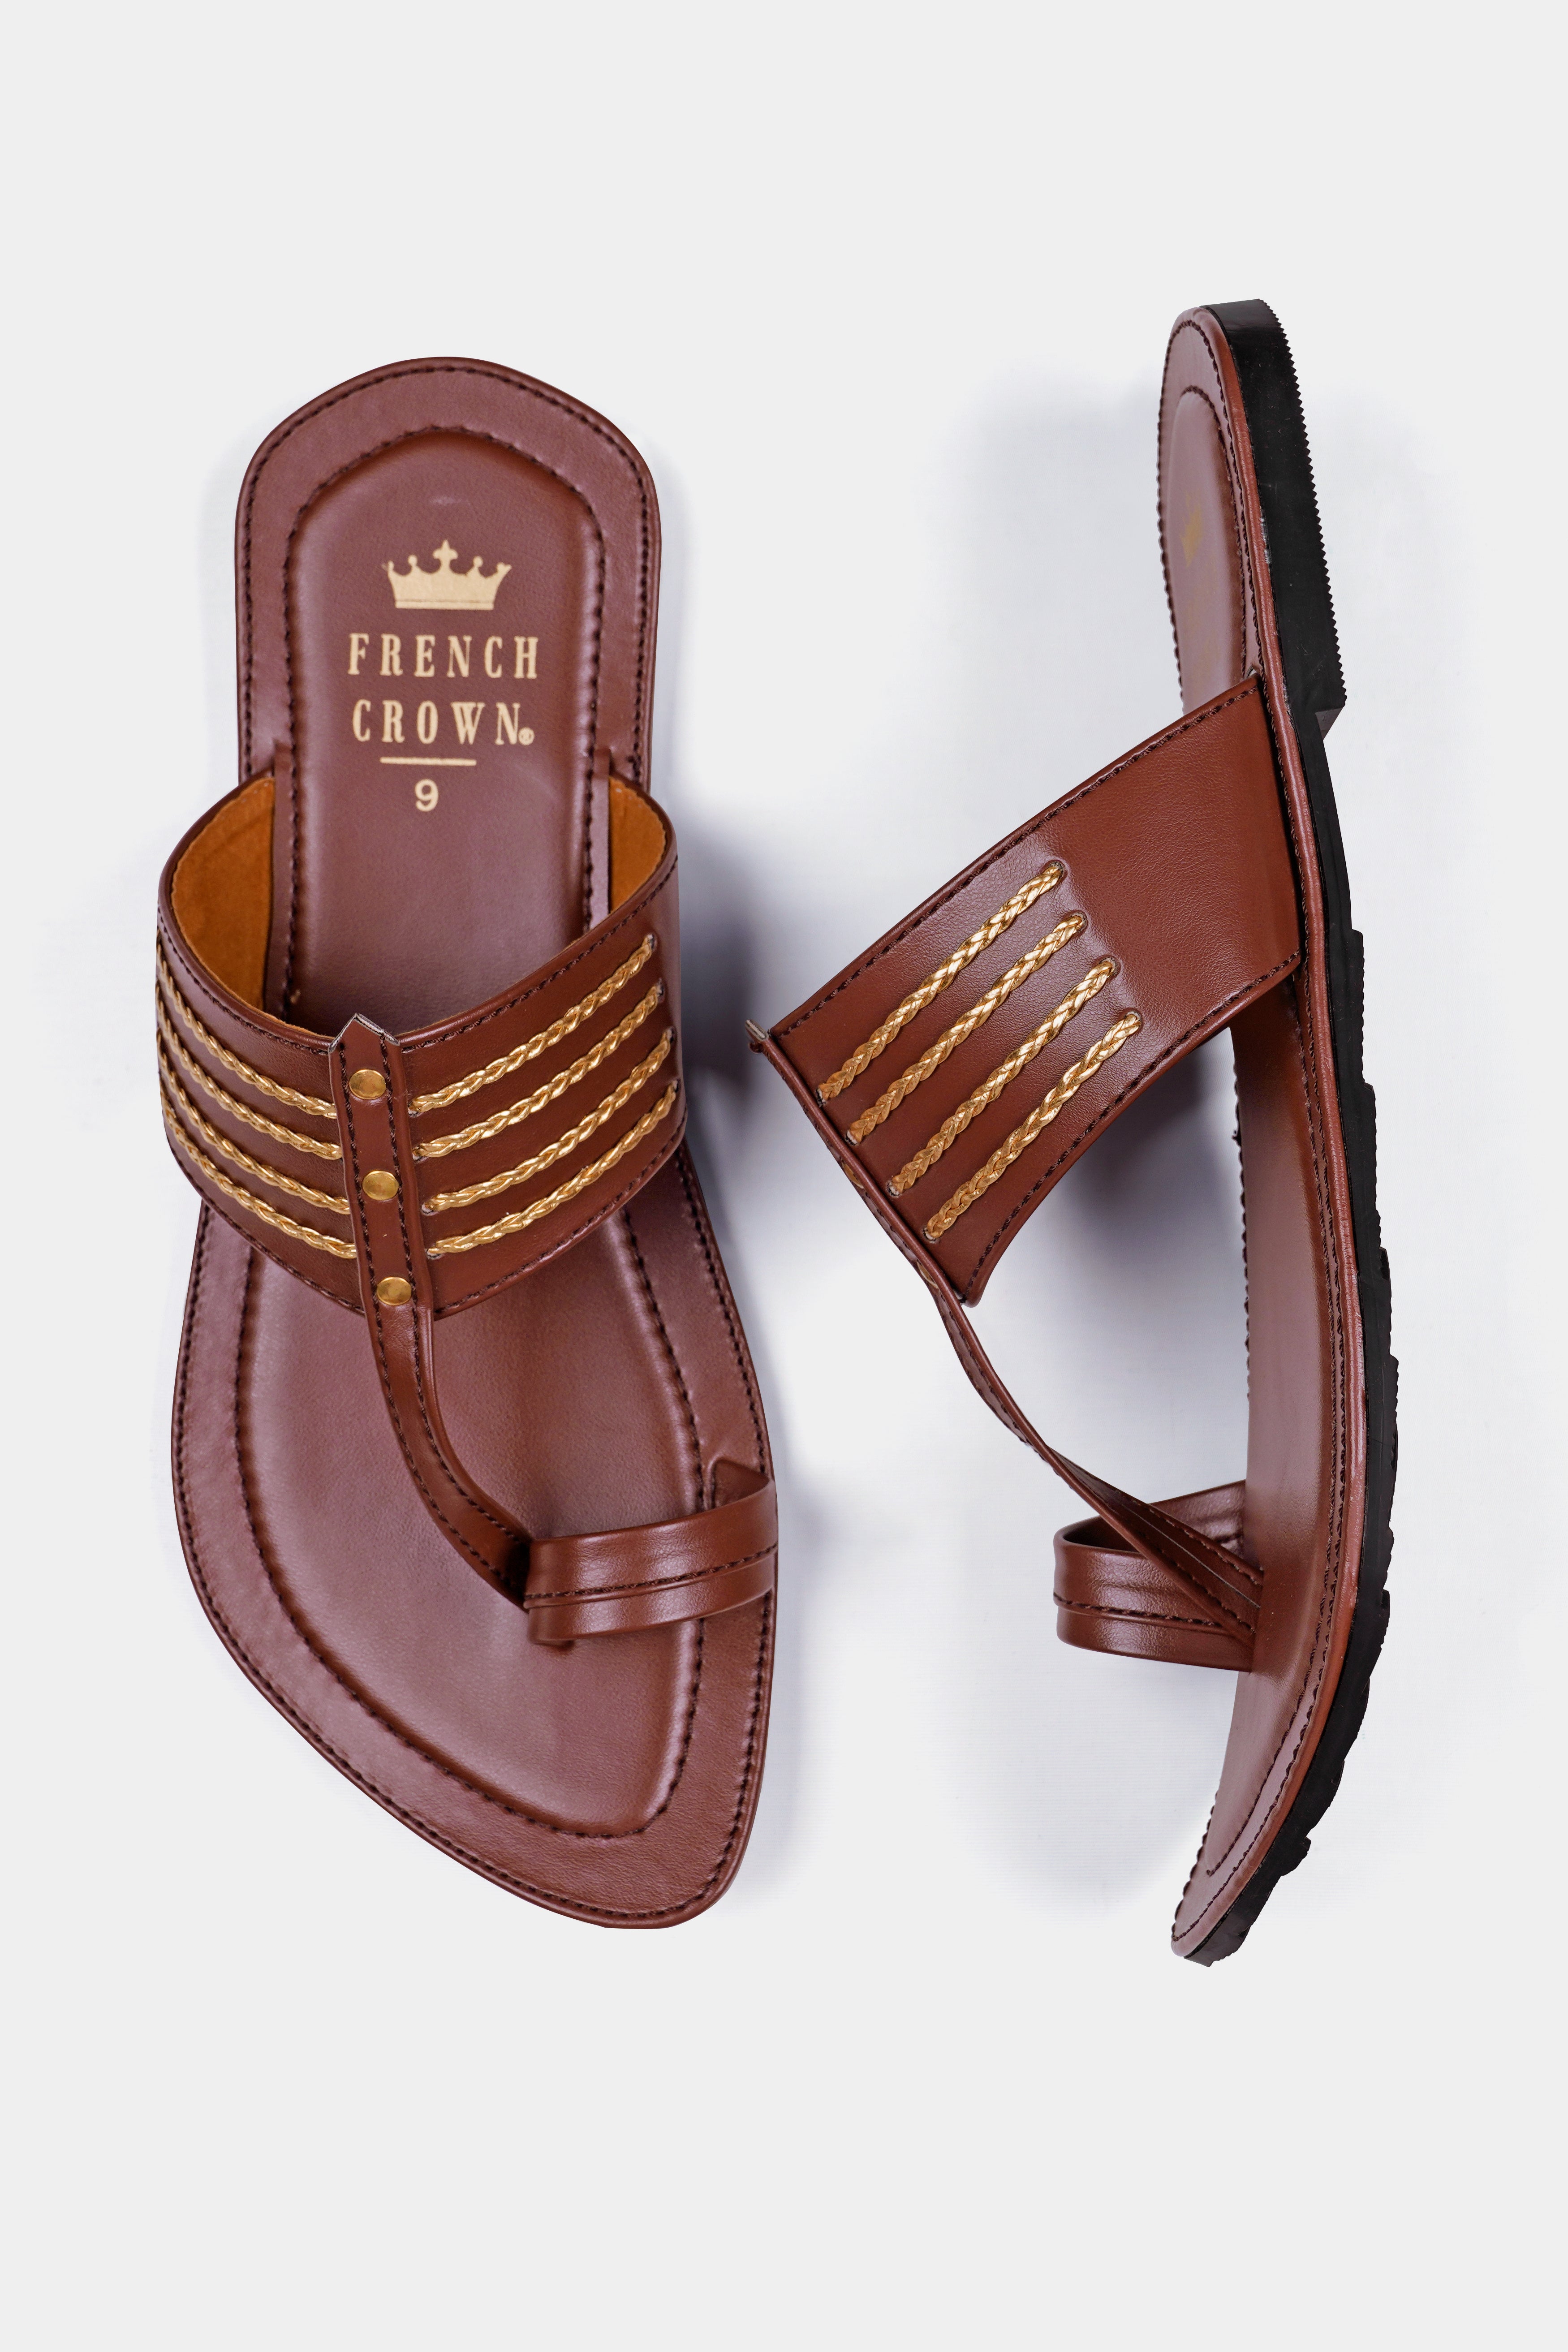 Brown with Golden Stitched Vegan Leather Kolhapuri Sandal FT153-6, FT153-7, FT153-8, FT153-9, FT153-10, FT153-11